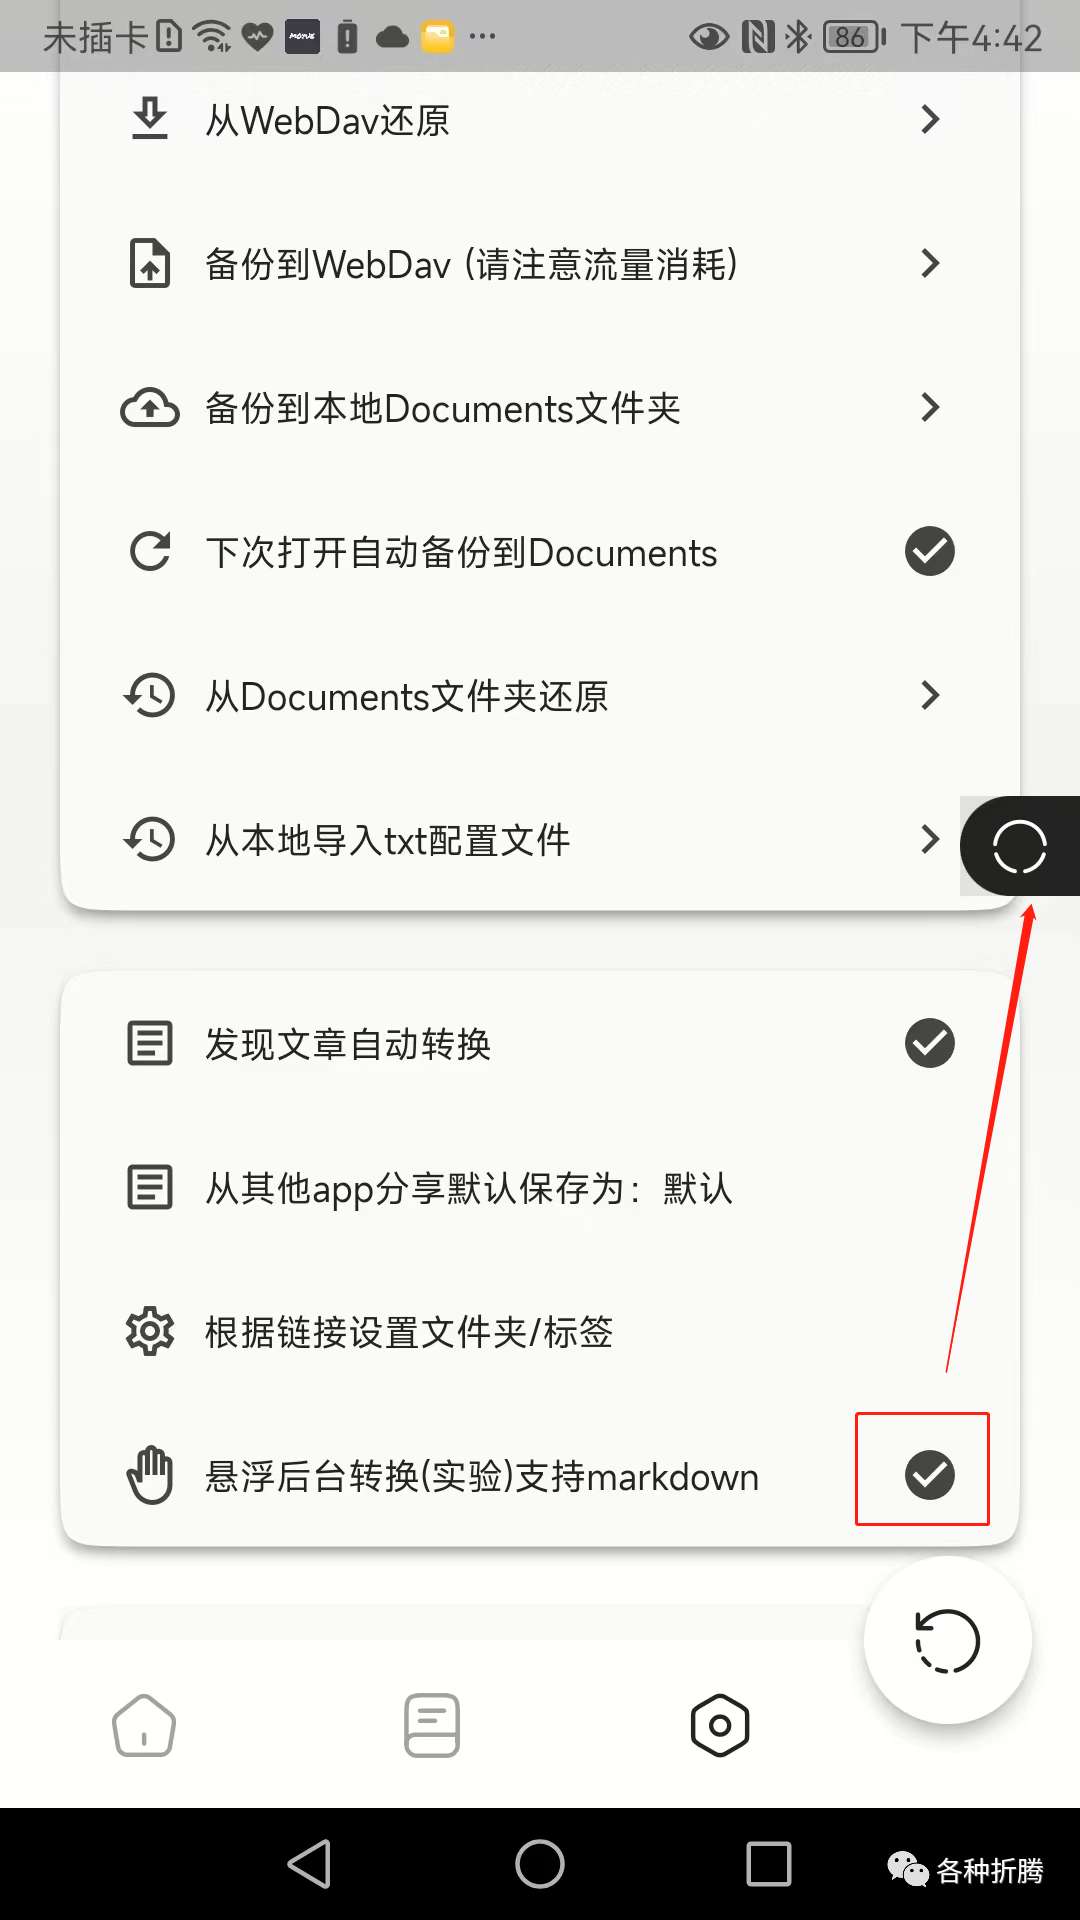 Android 上剪藏文章和网页到 Obsidian 笔记库。